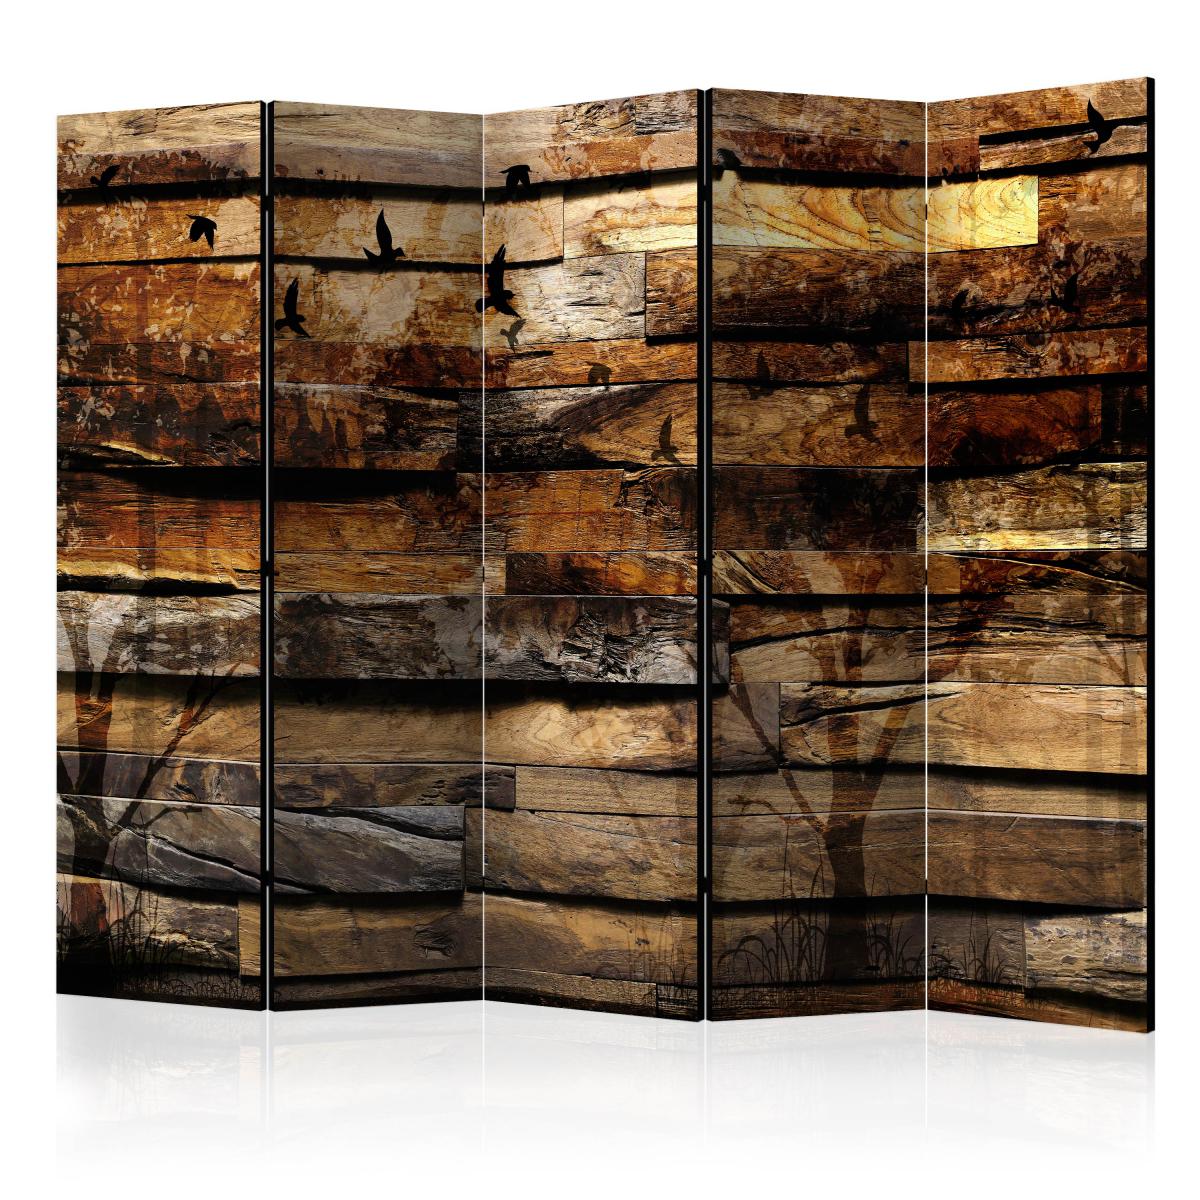 Bimago - Paravent 5 volets - Reflection of Nature II [Room Dividers] - Décoration, image, art | 225x172 cm | XL - Grand Format | - Cloisons